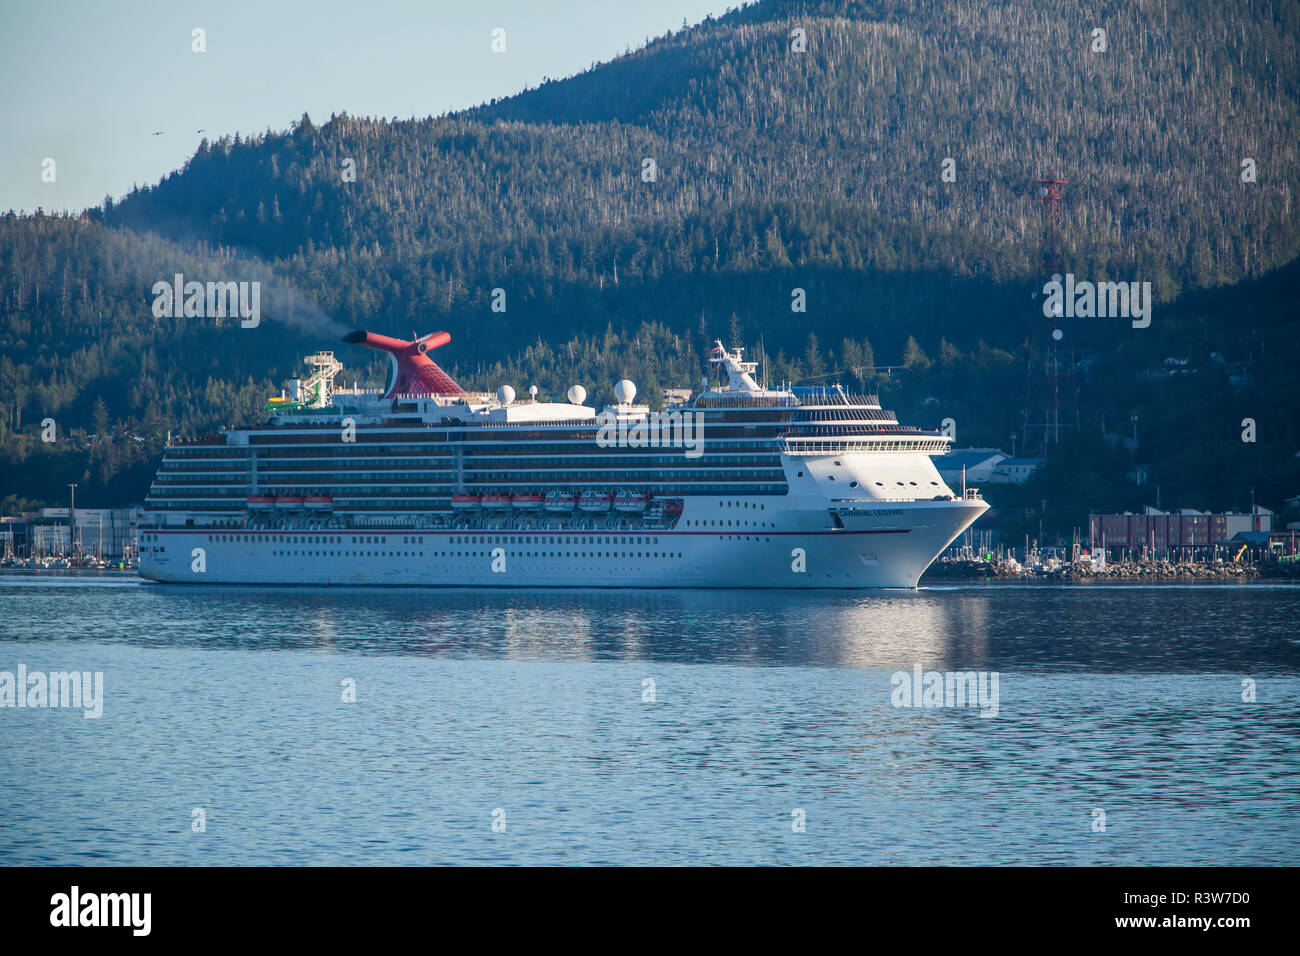 USA, Alaska, Ketchikan. Cruise ship at the dock Stock Photo Alamy